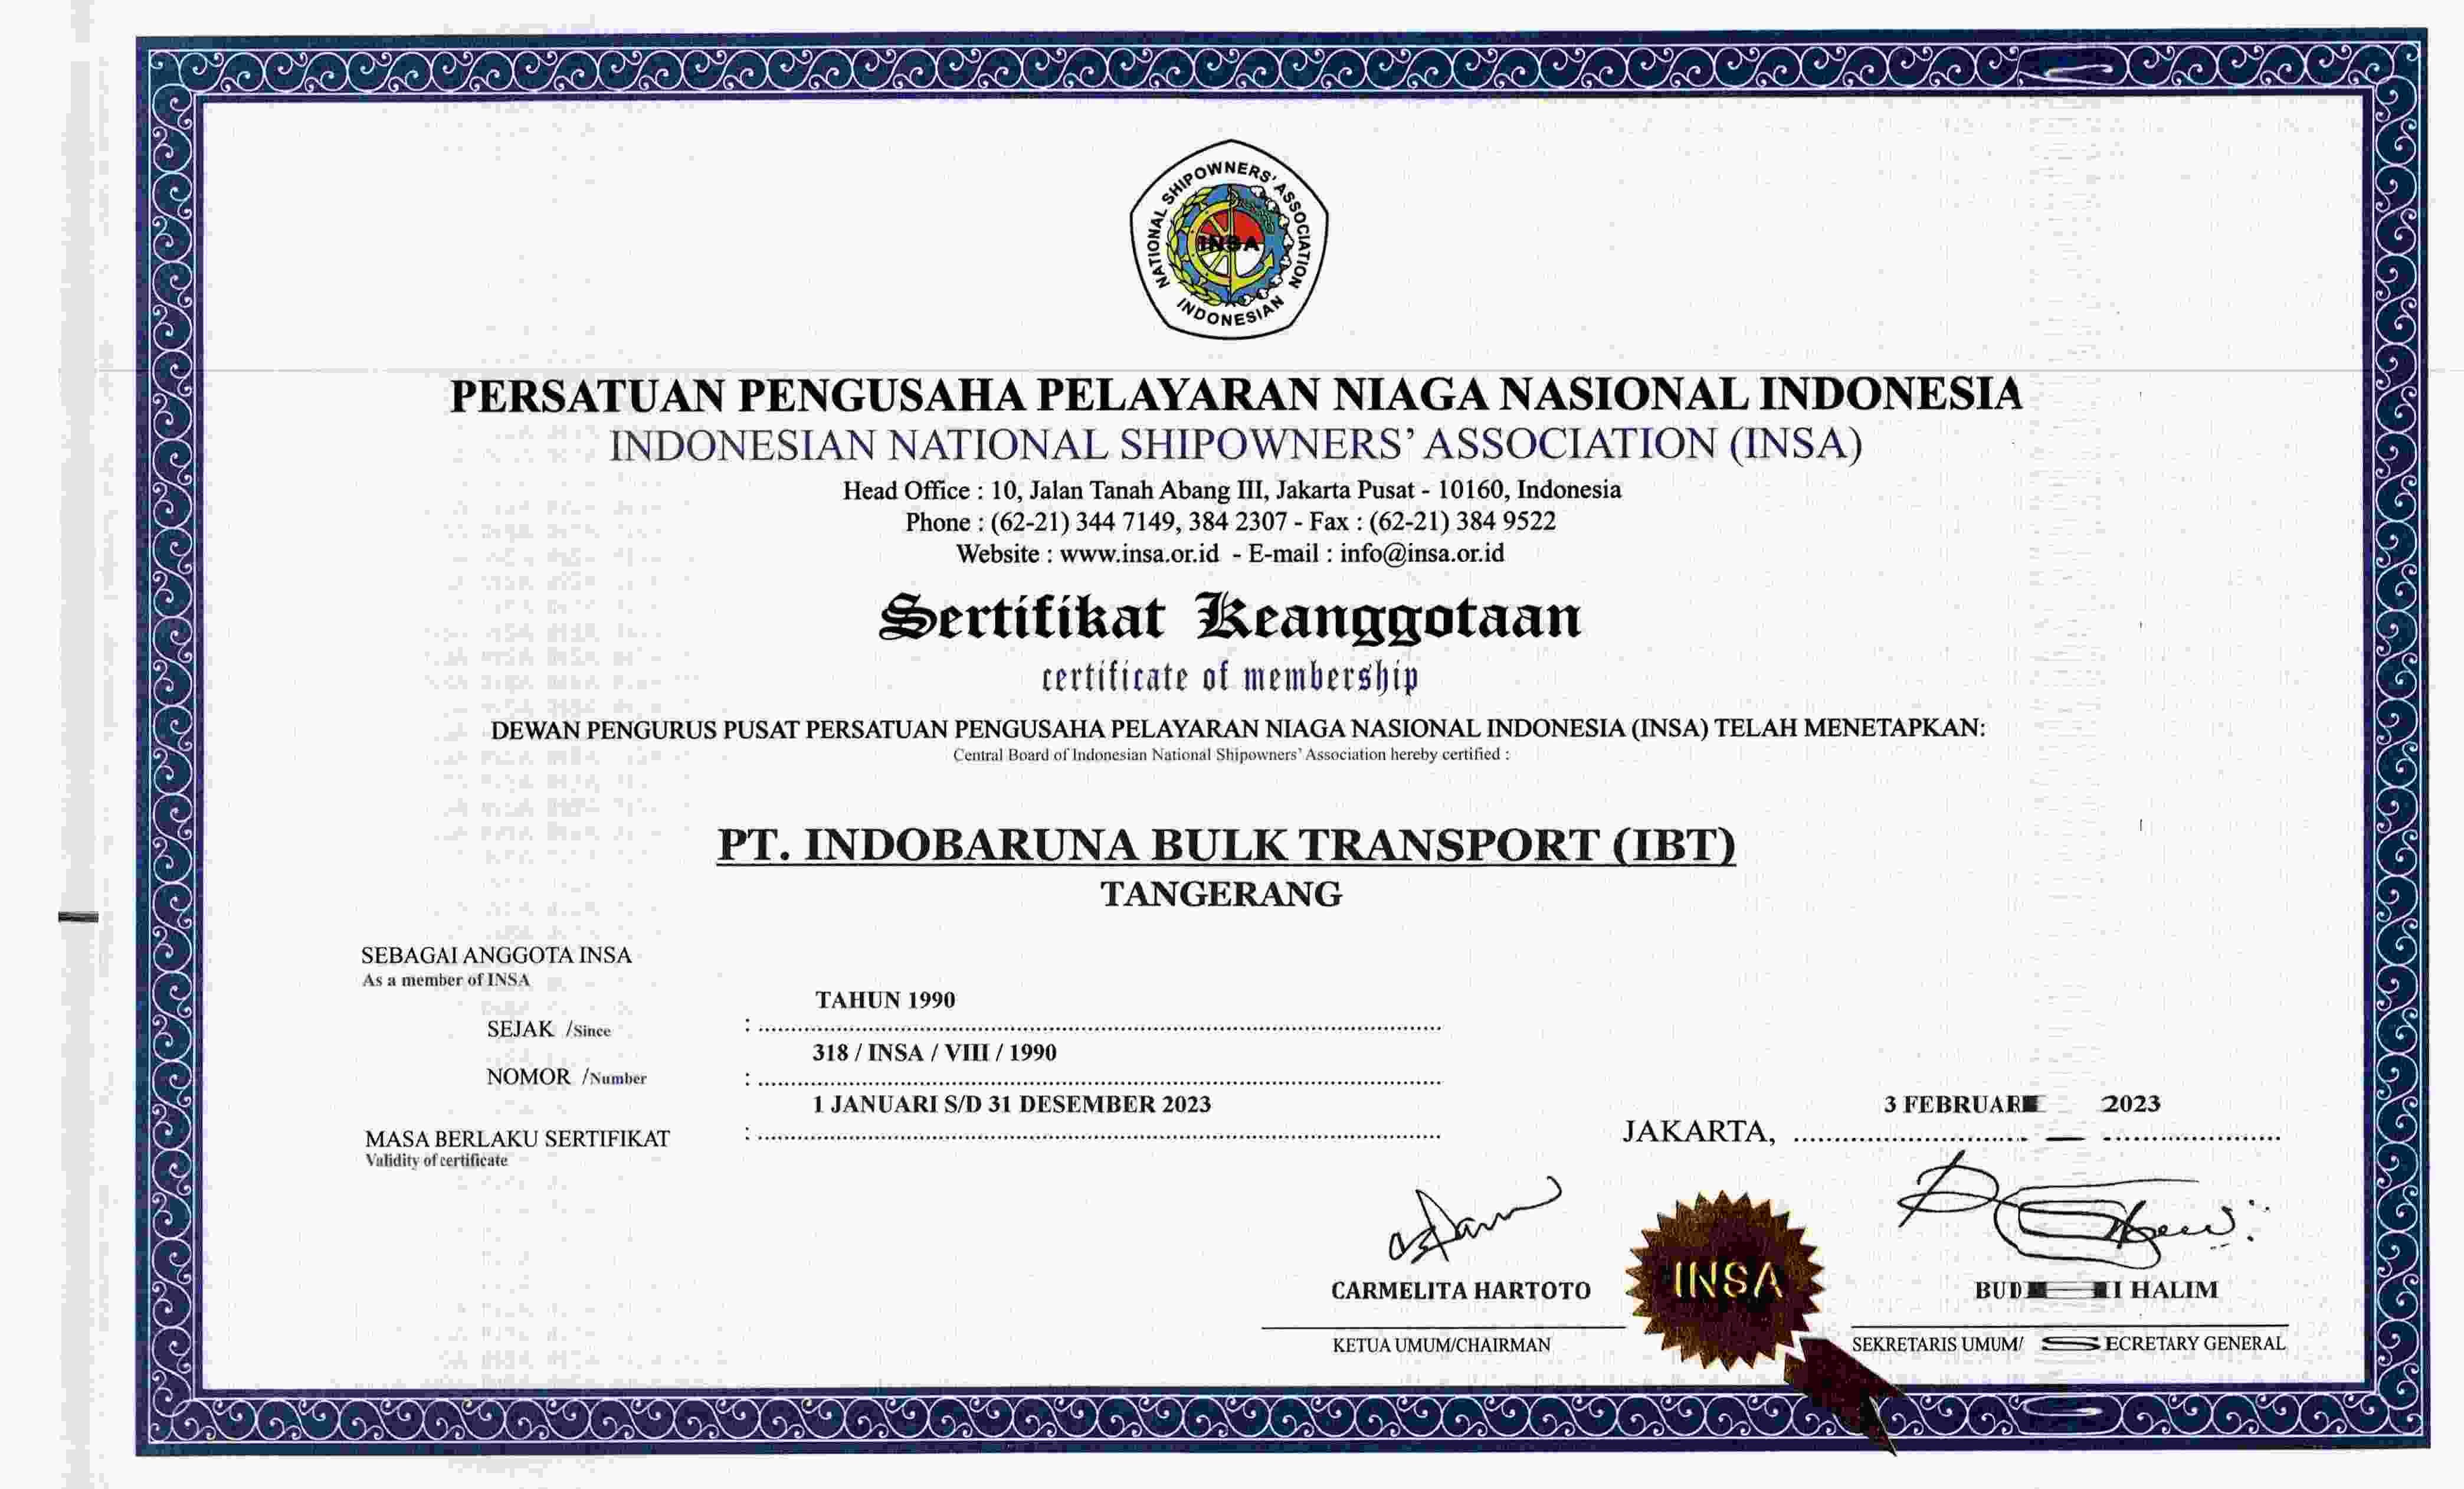 Image Certificate